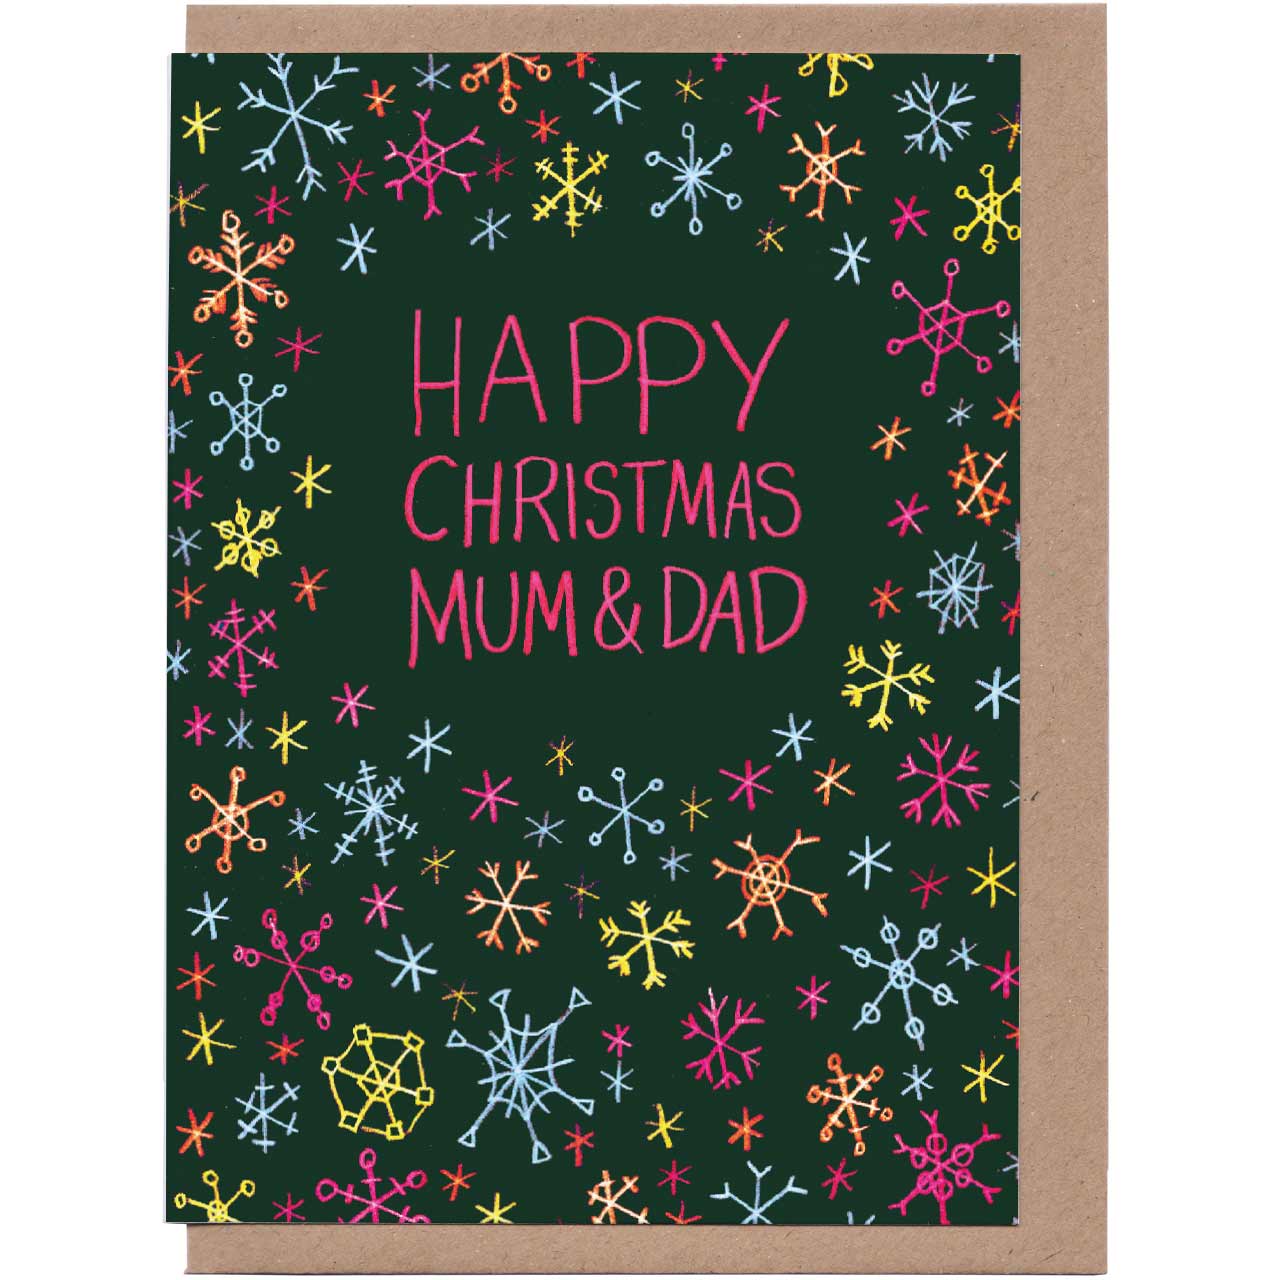 Snowflakes Mum and Dad Christmas Card